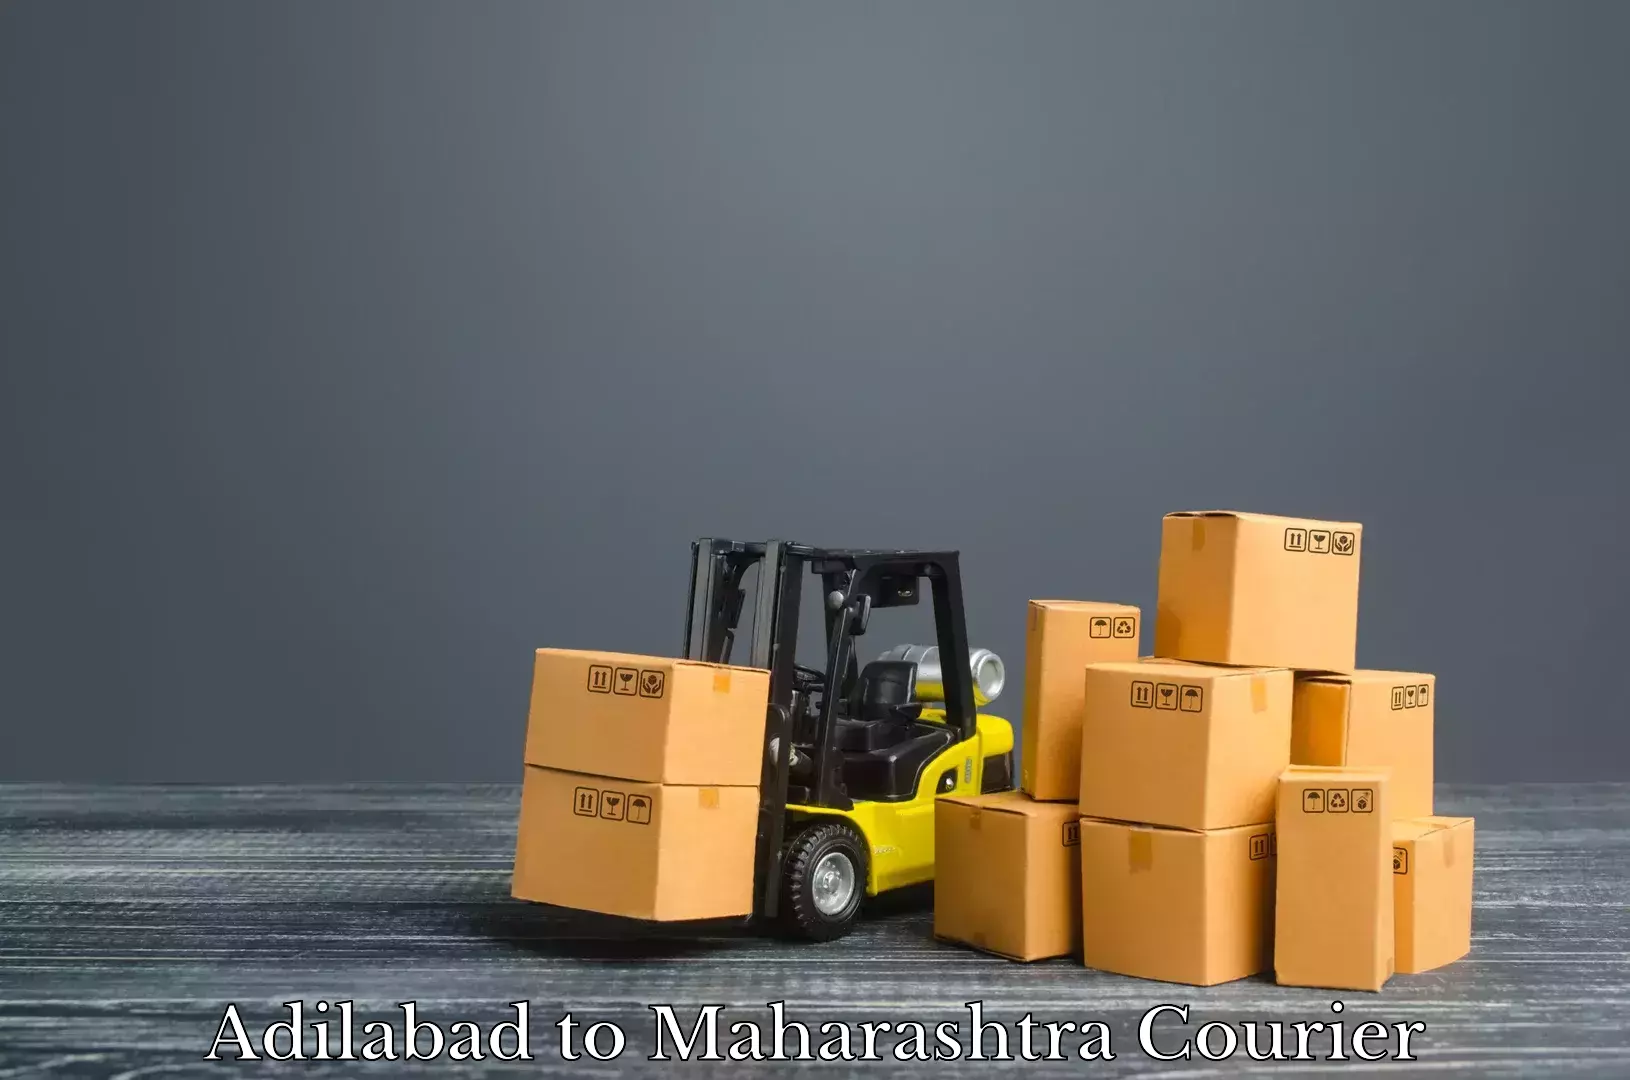 Luggage delivery app Adilabad to Aurangabad